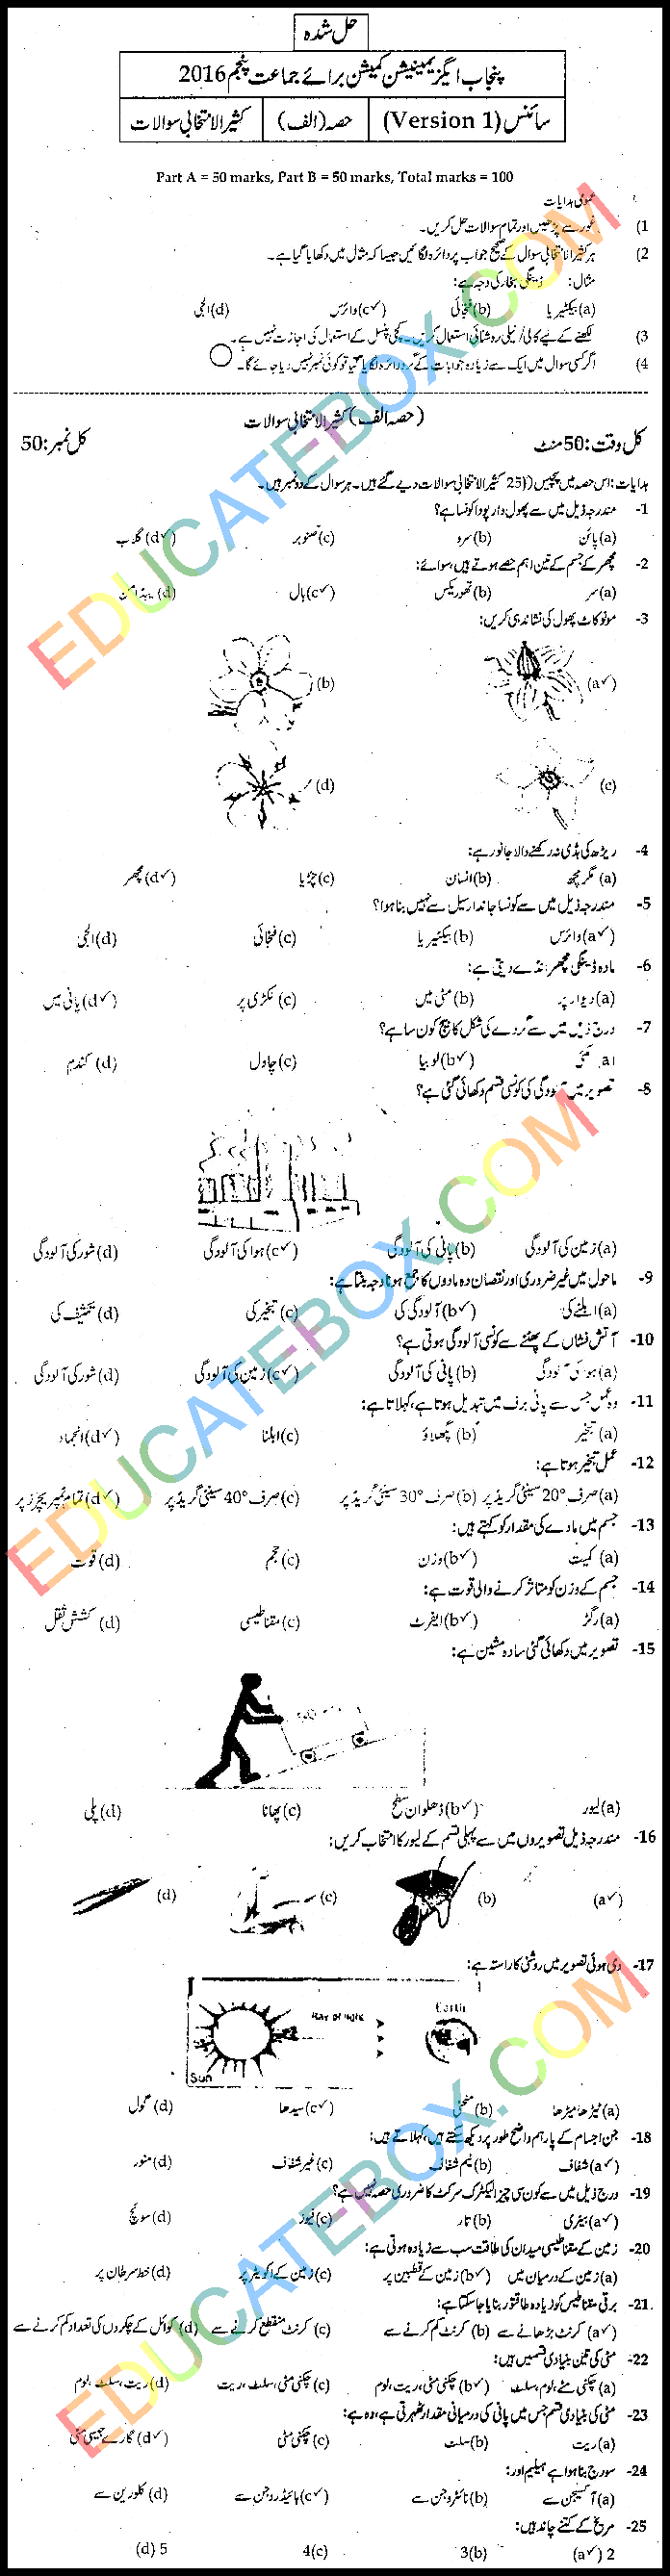 Past Paper Science (Urdu Medium) 5th Class 2016 Punjab Board (PEC) Solved Paper Objective Type اپٹو ڈیٹ پیپر سائنس اردو میڈیم برائے جماعت پنجم 2016 پنجاب بورڈ سولڈ پیپر آبجیکٹیو ٹائپ